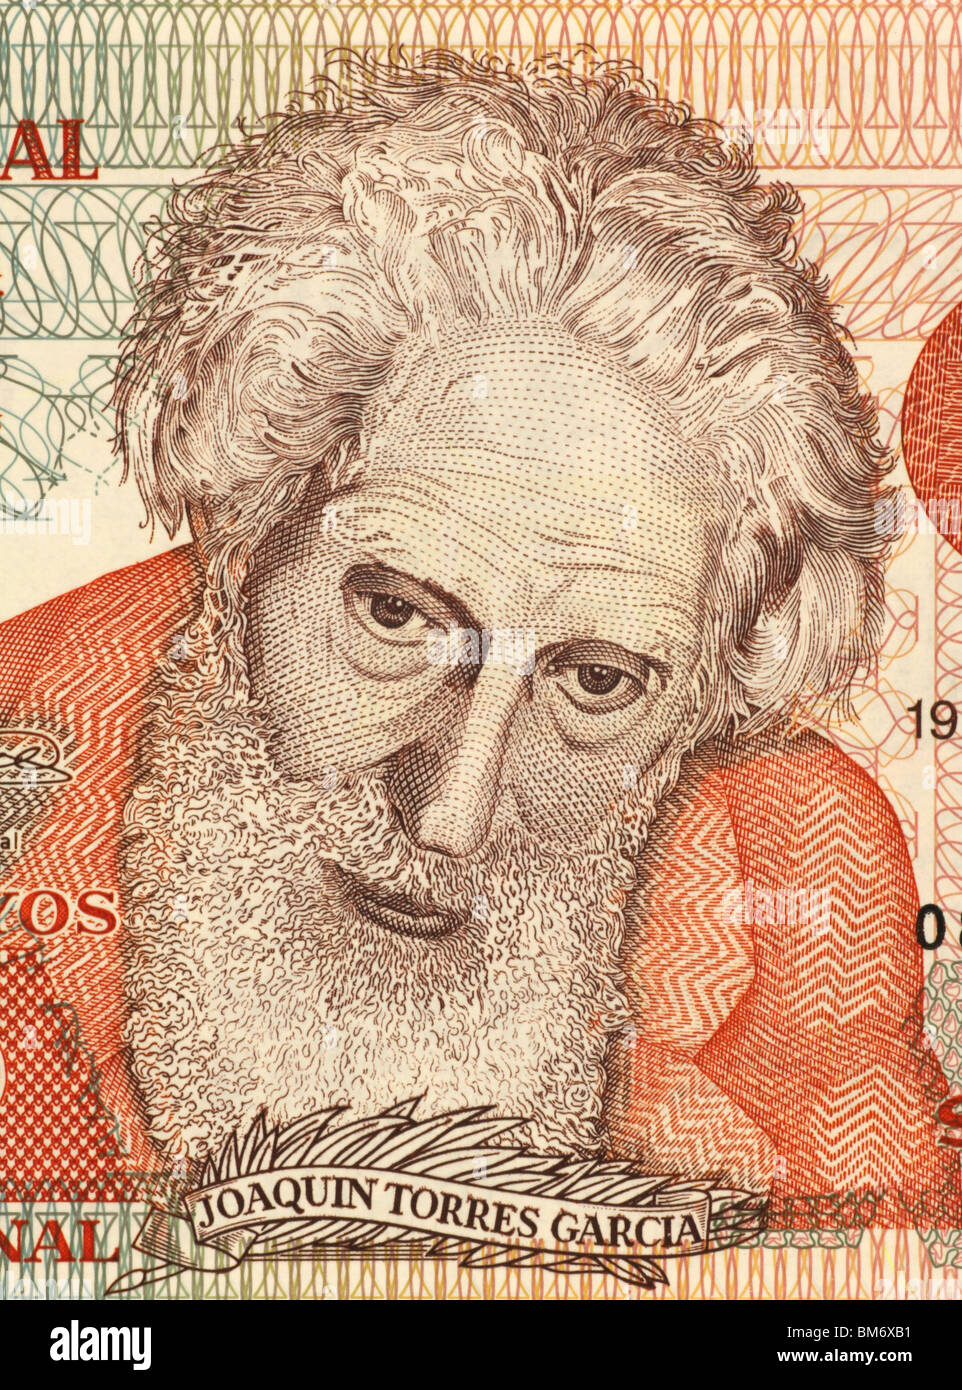 Joaquin Torres Garcia (1874-1949) on 5 Pesos Uruguayos 1998 Banknote from Uruguay. Stock Photo